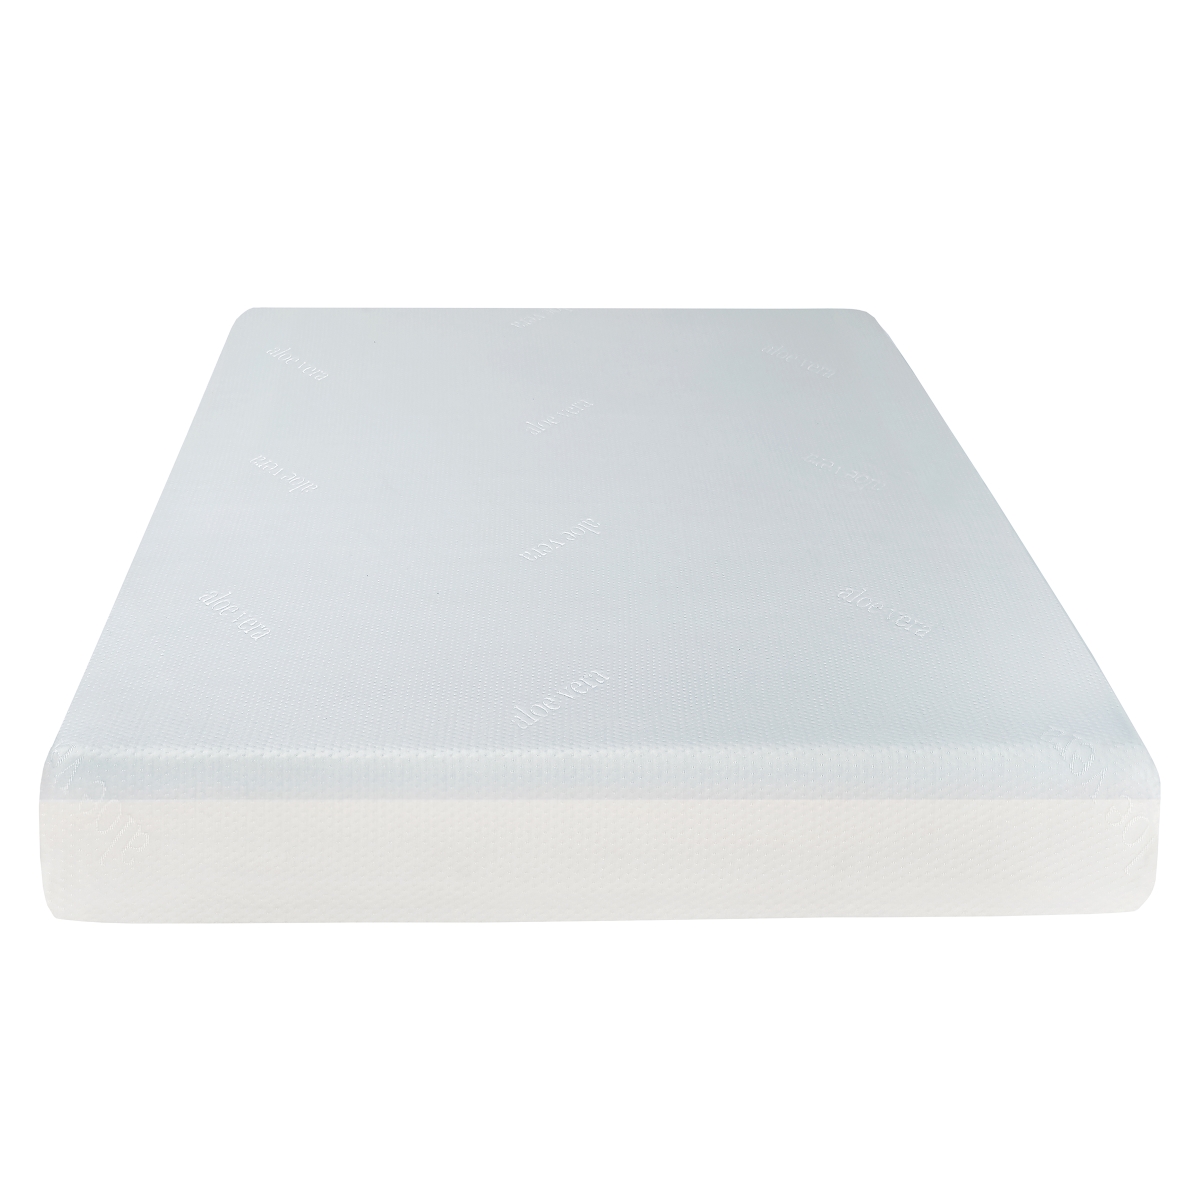 Picture of Primo International 29915 6 in. Doze Gel Memory Foam Mattress in a Box, White - Full Size